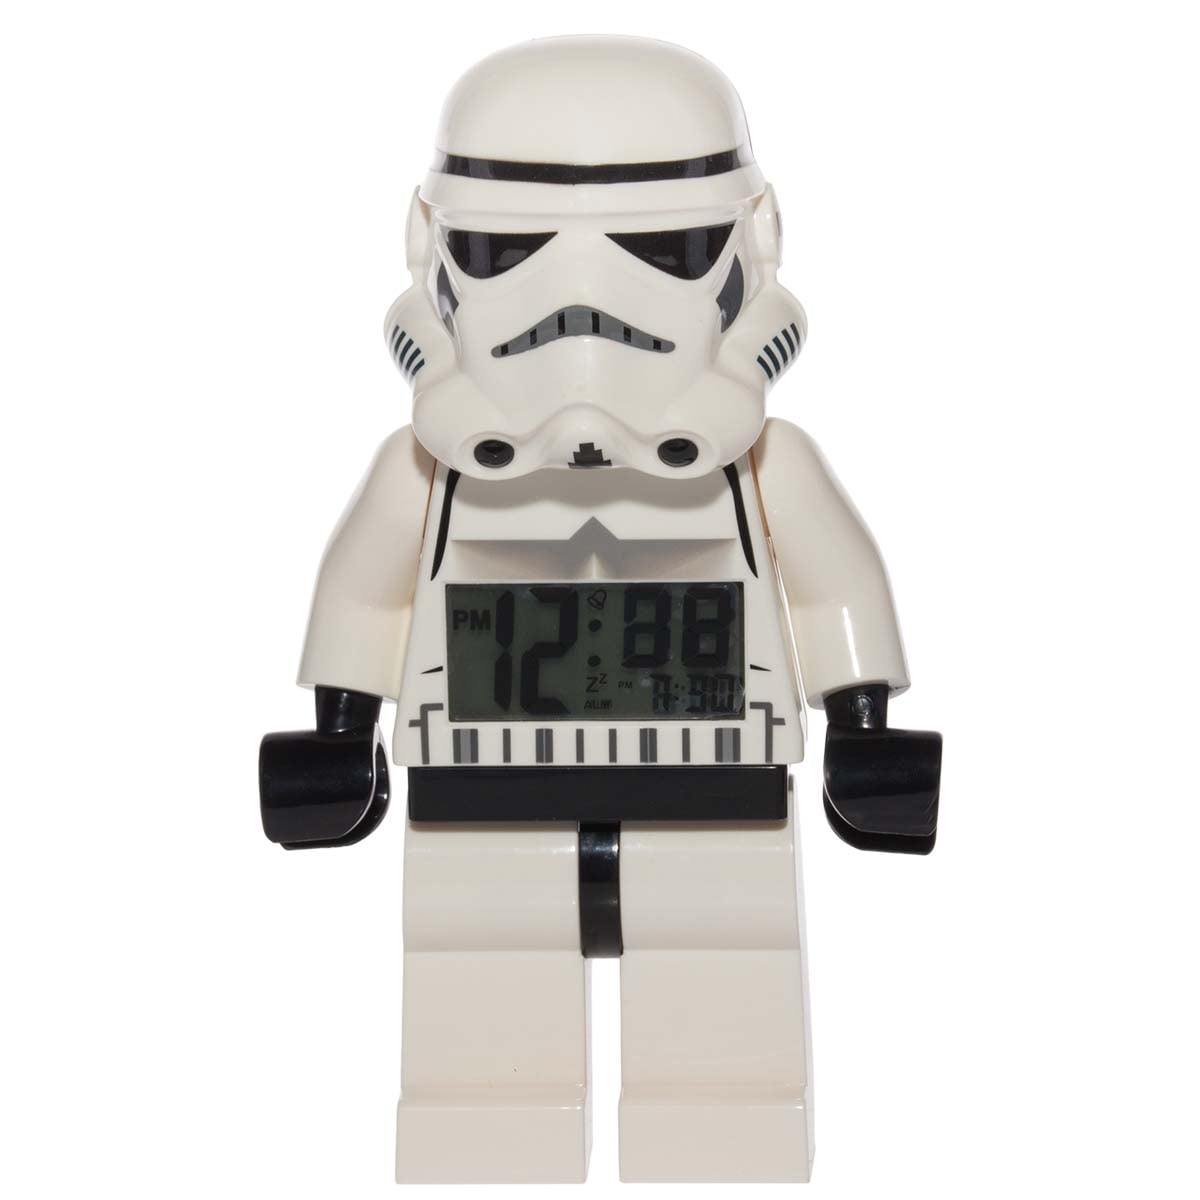 LEGO Star Wars Stormtrooper Sound alarm clock 